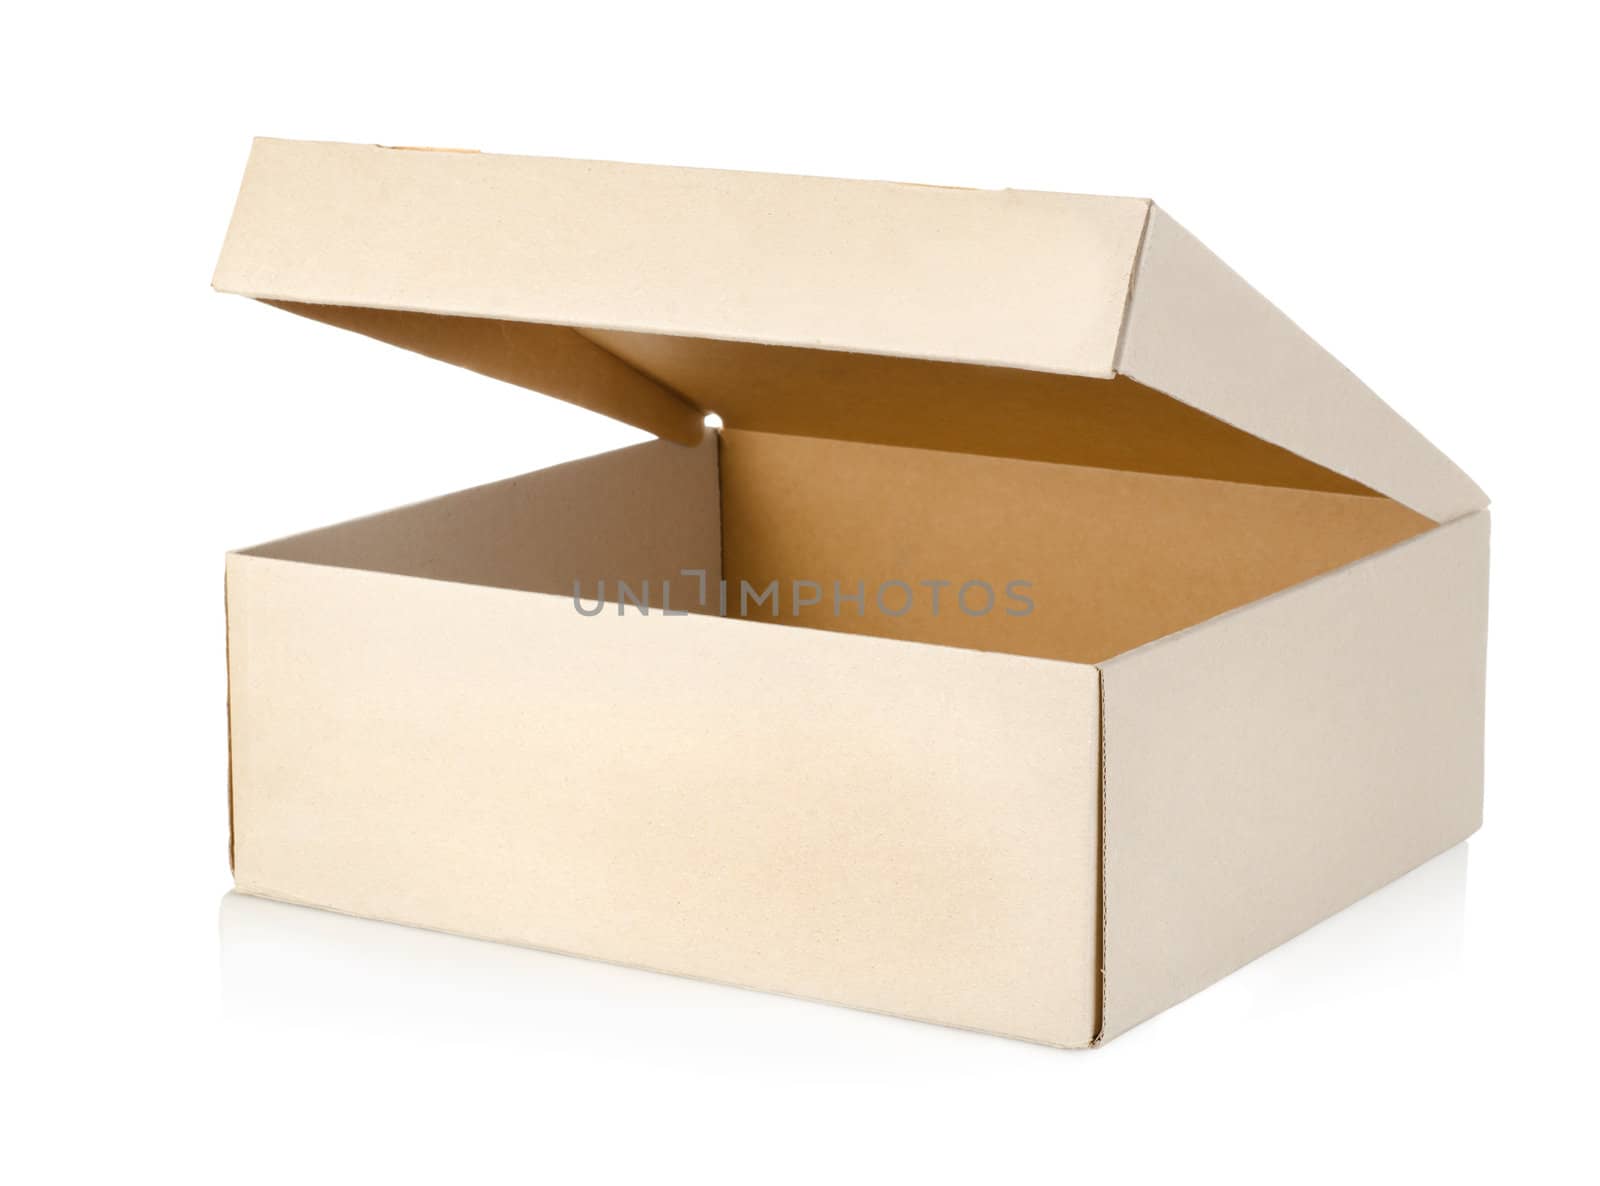 Cardboard box by Givaga